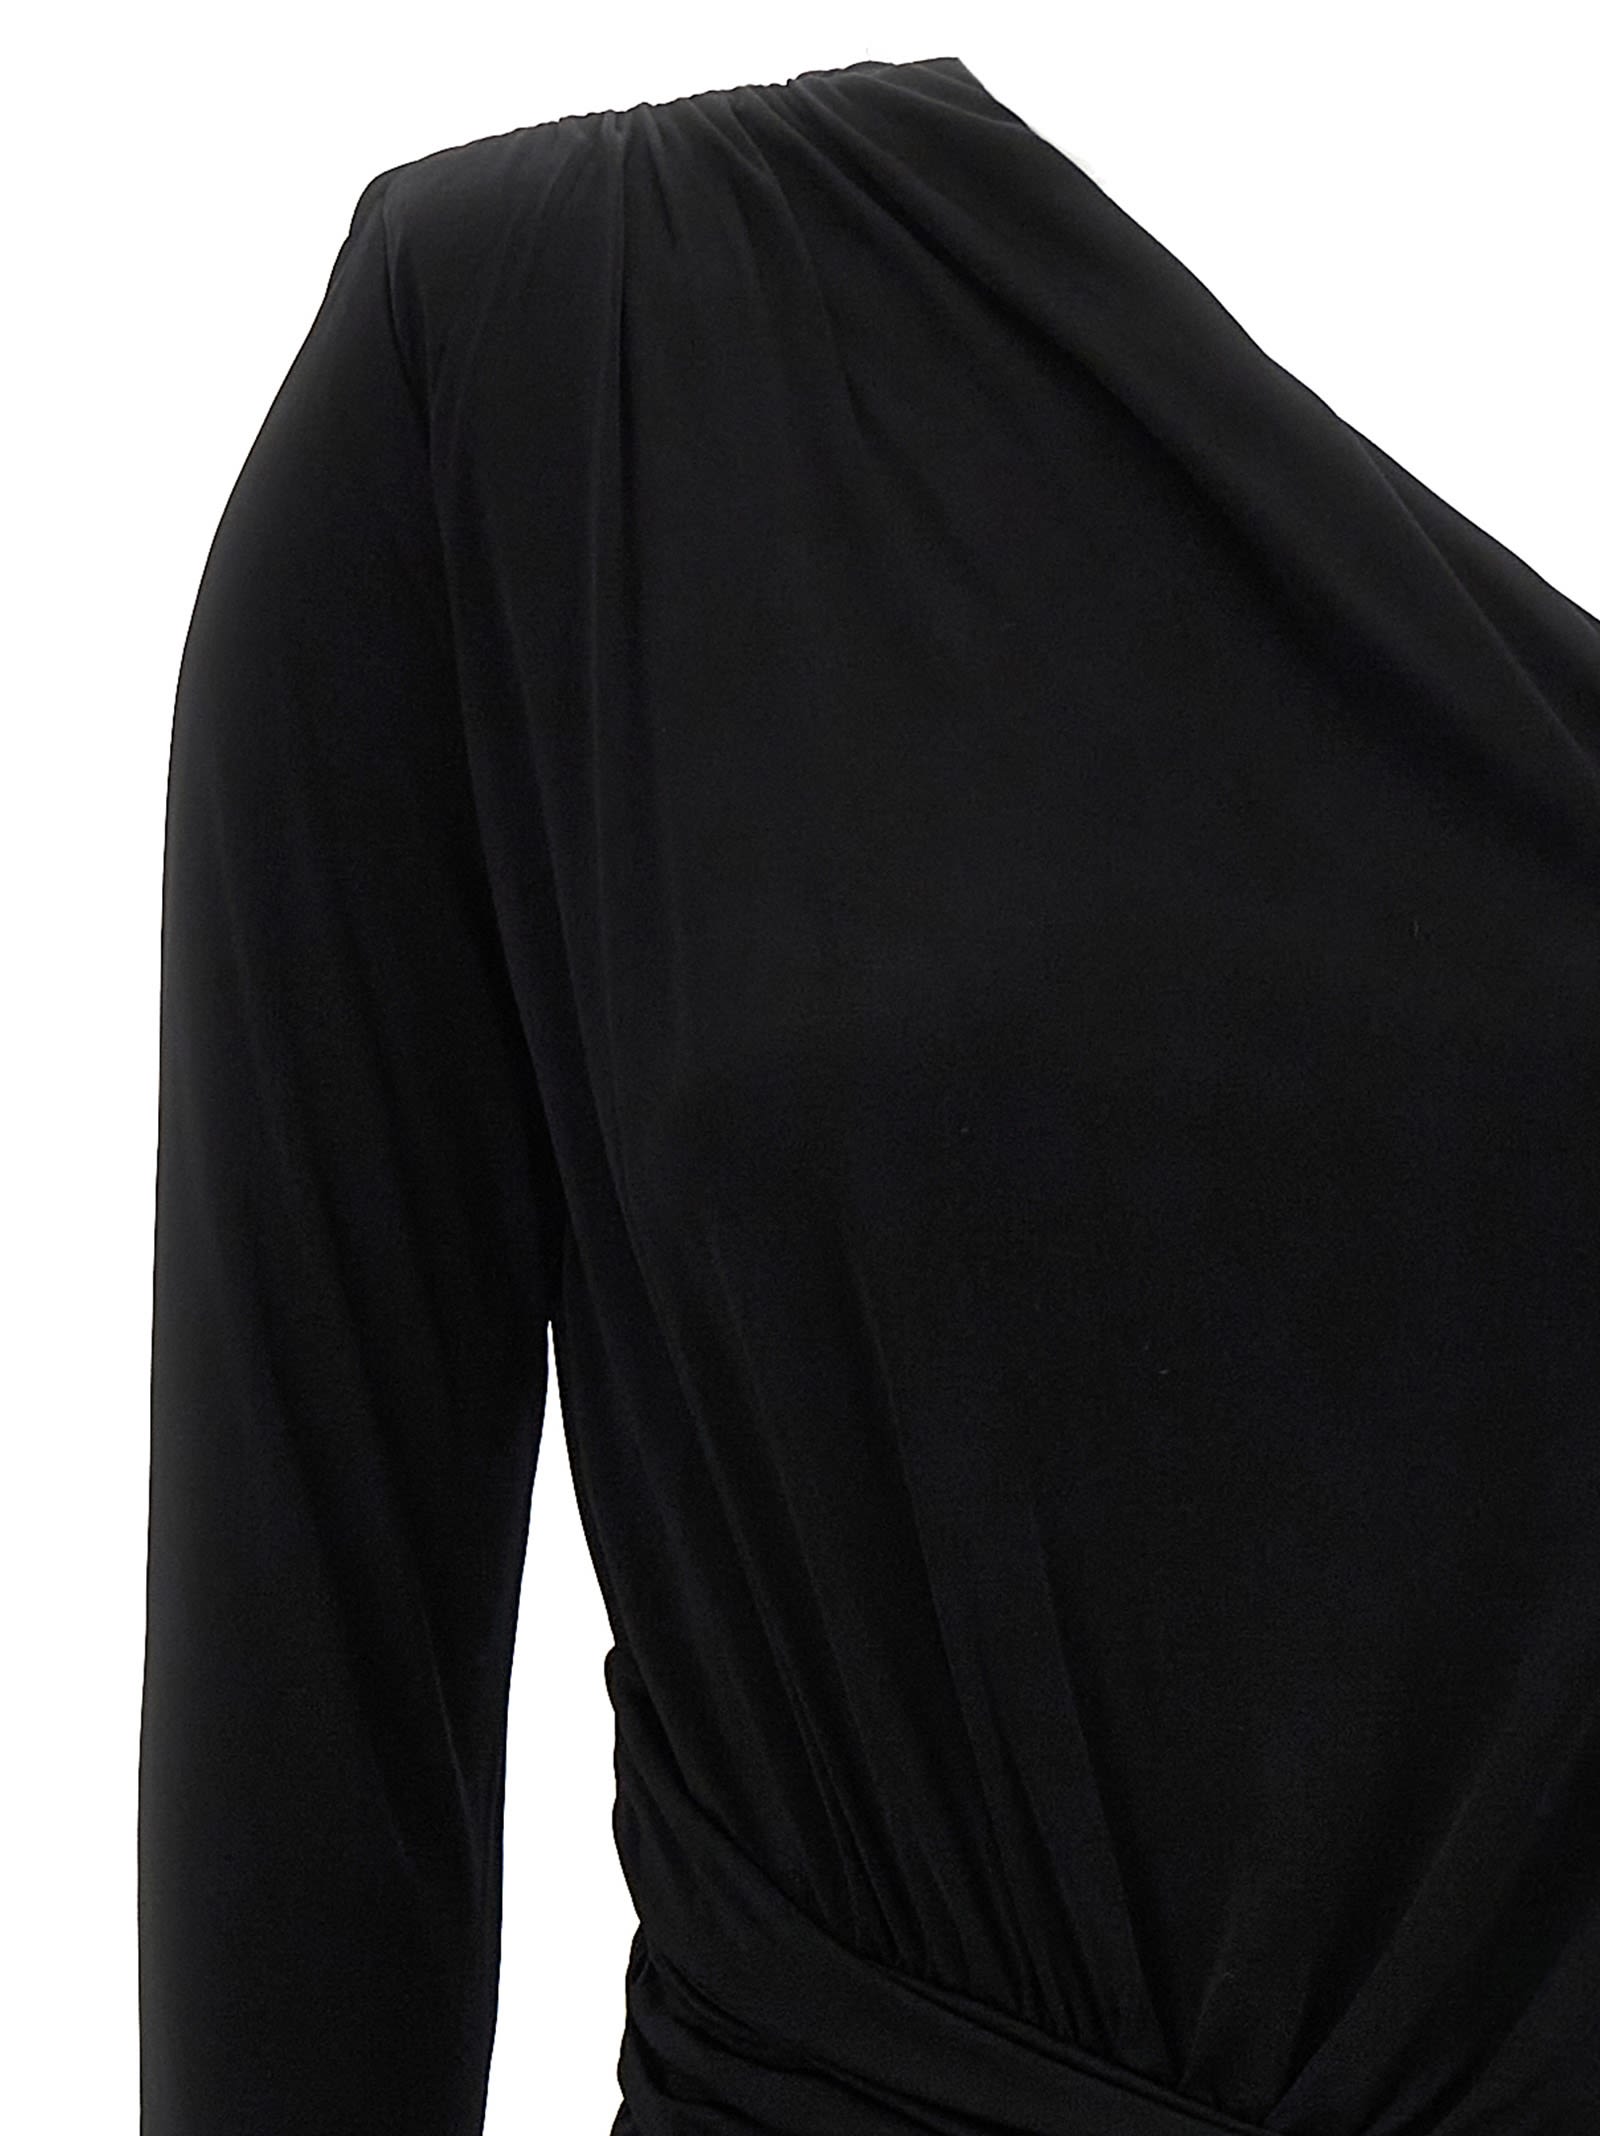 PINKO fringed midi shirt dress - Black